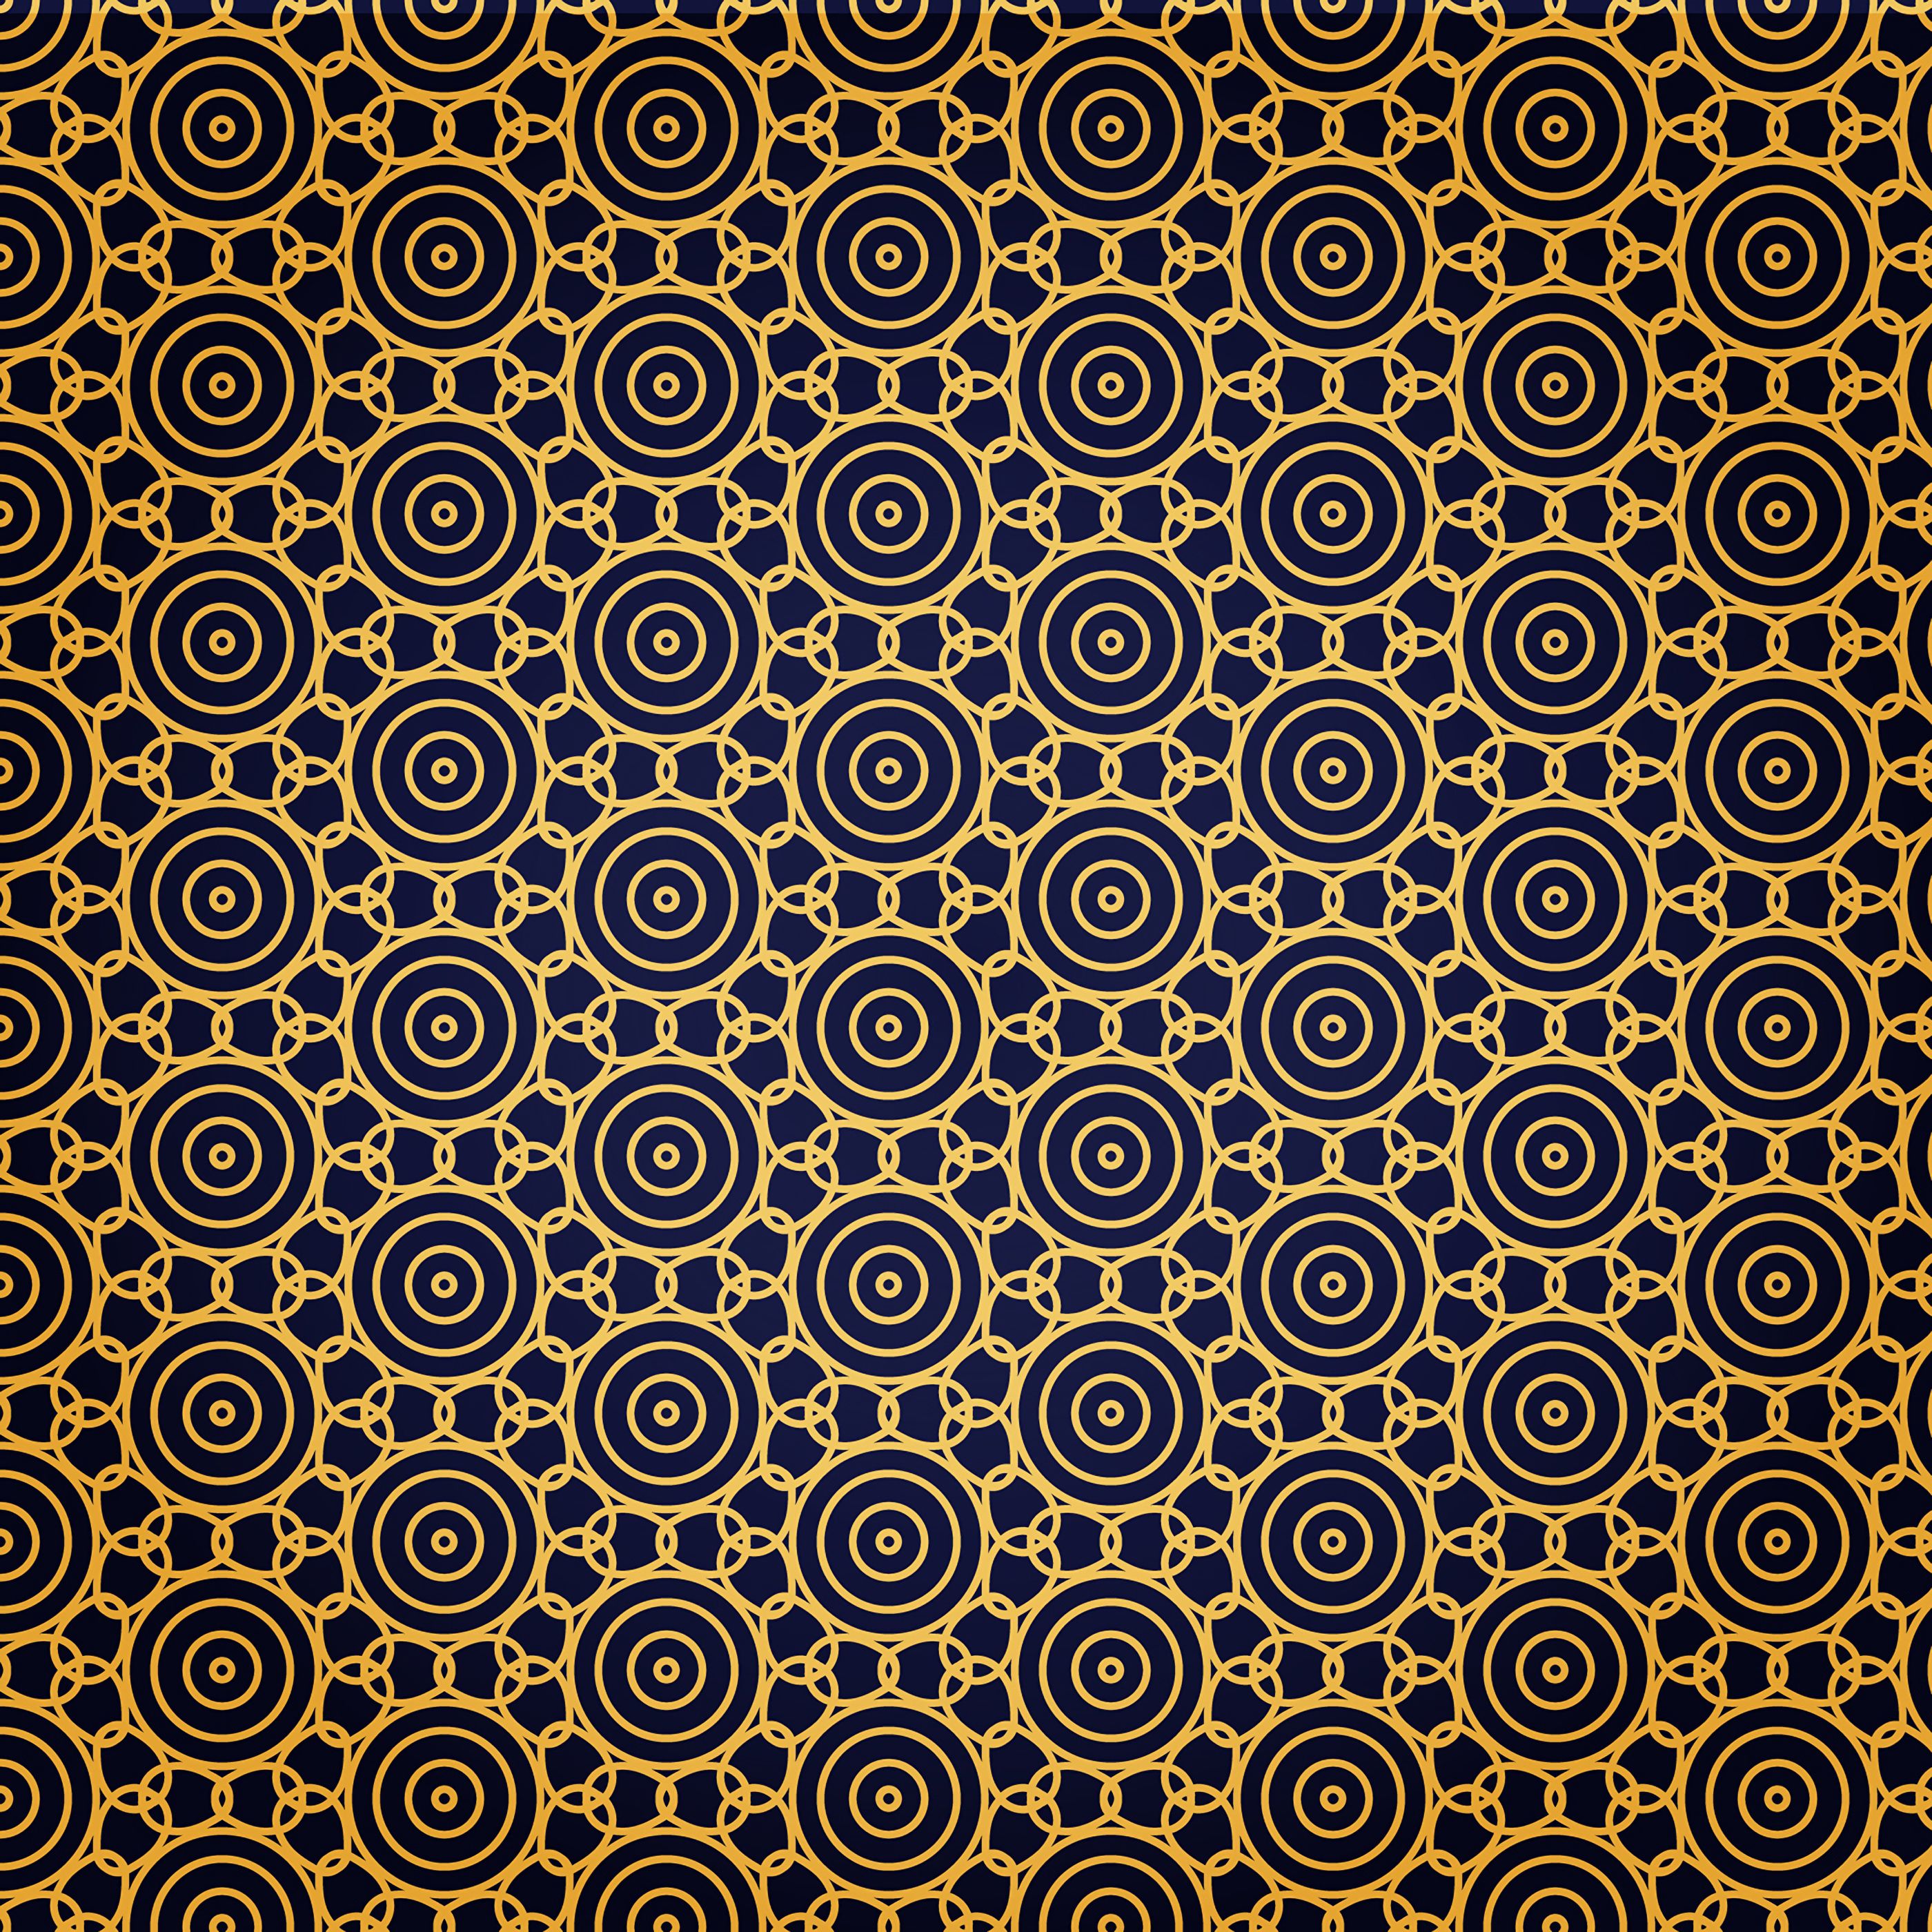 golden, gold, circles, pattern, texture, textures, chain